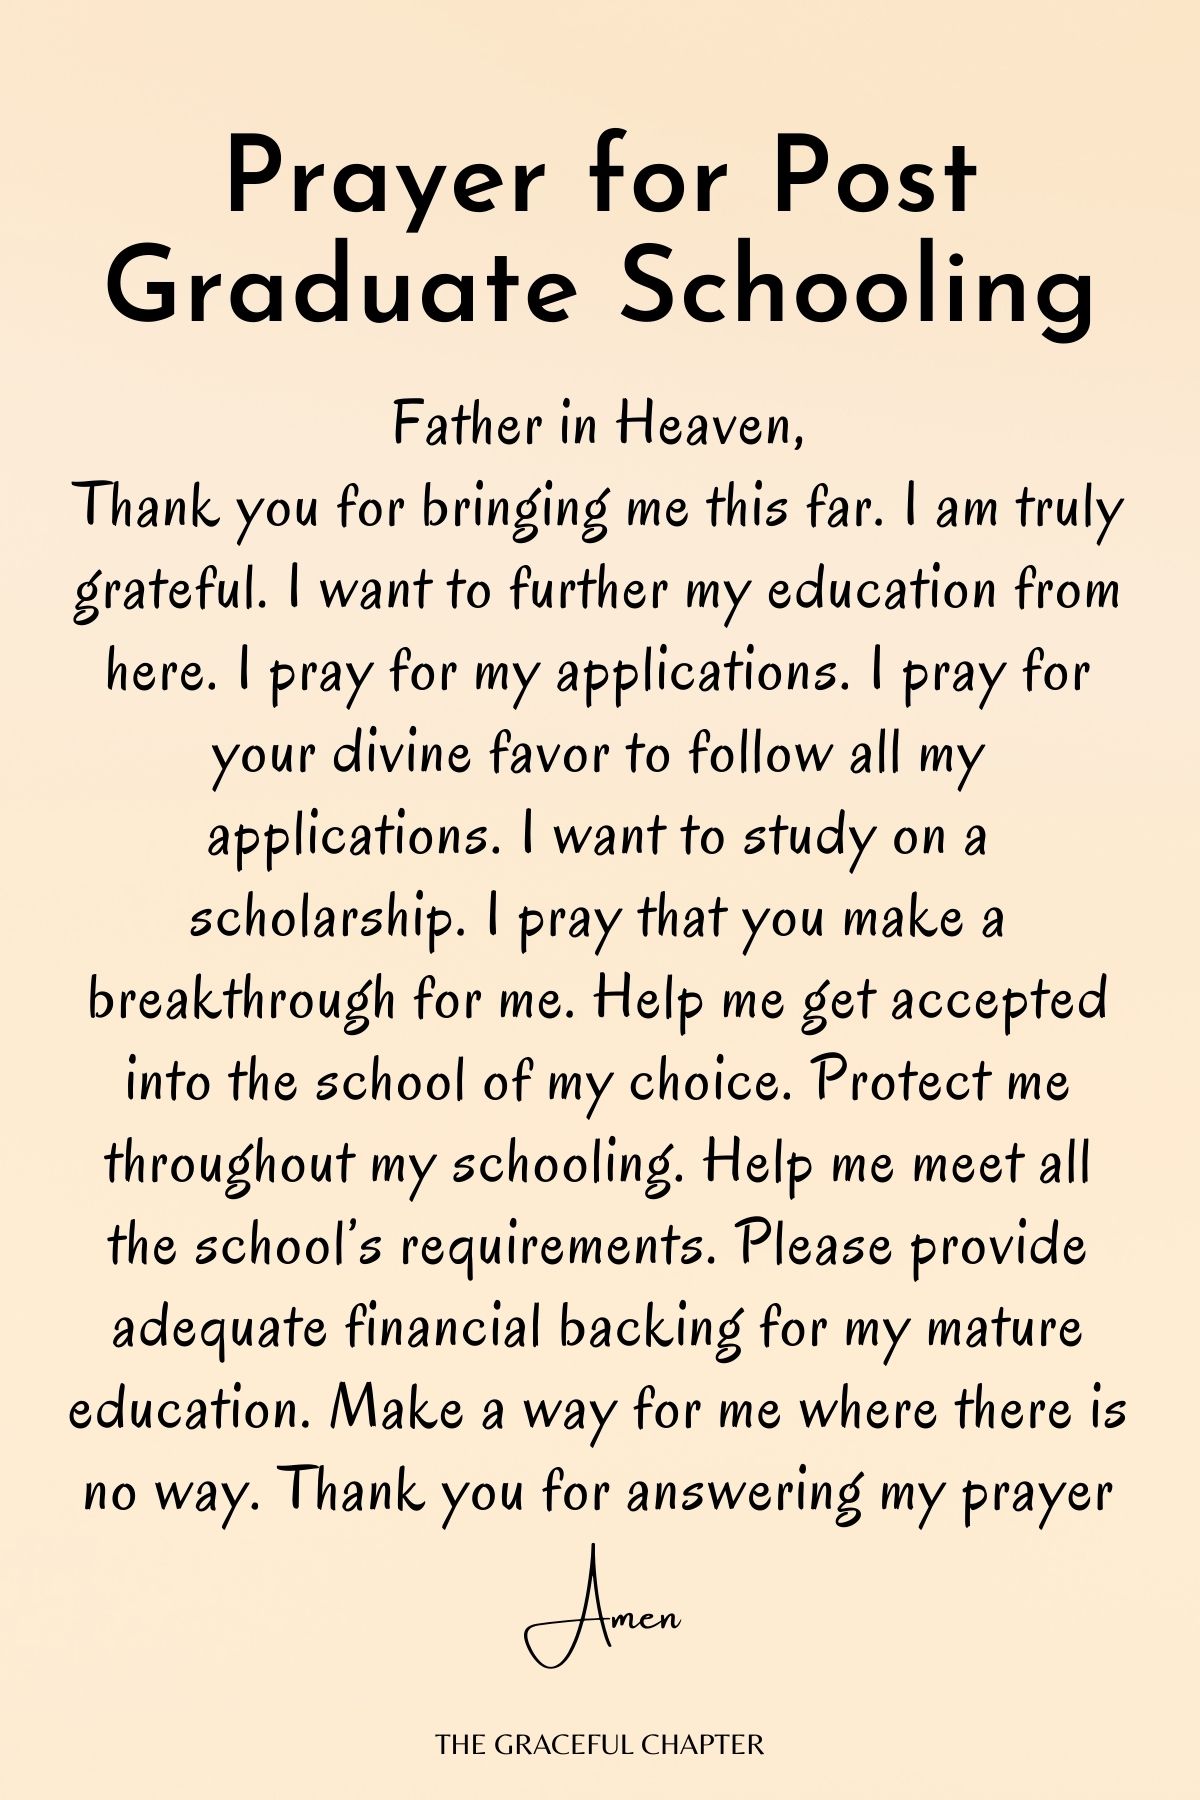 Prayer for Post Graduate Schooling